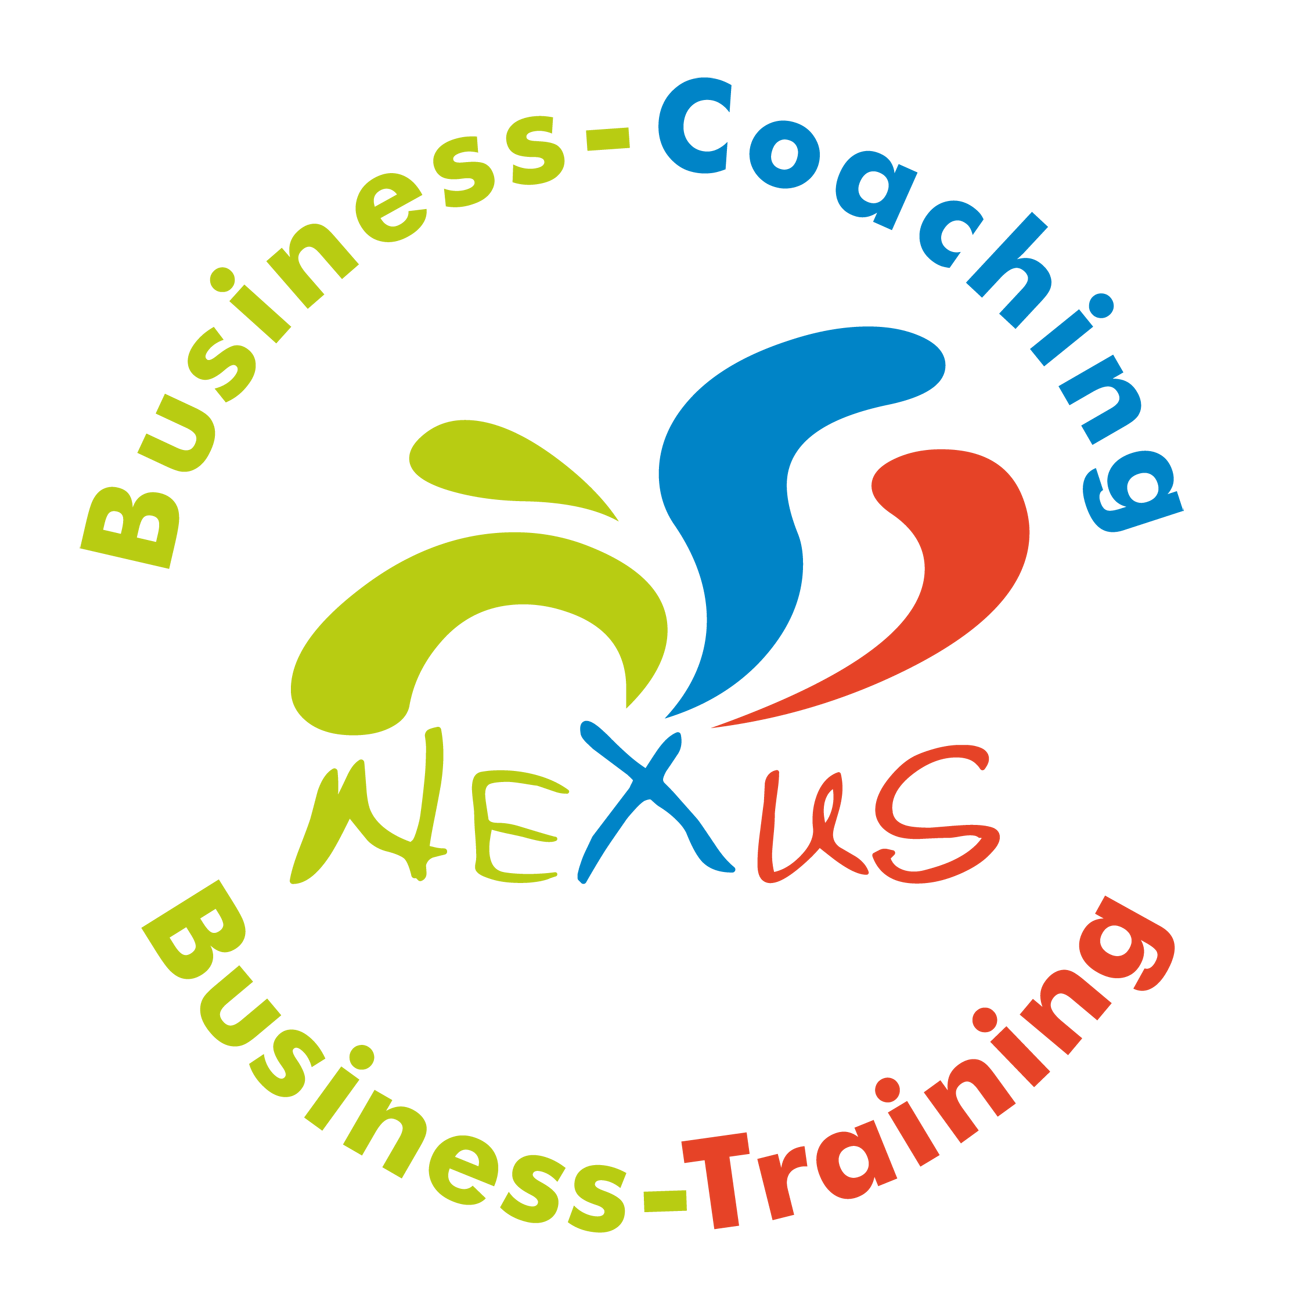 Business-Coaching Bad Soden, Führungskräfte-Coaching, Führungskräftetraining, Persönlichkeitstraining